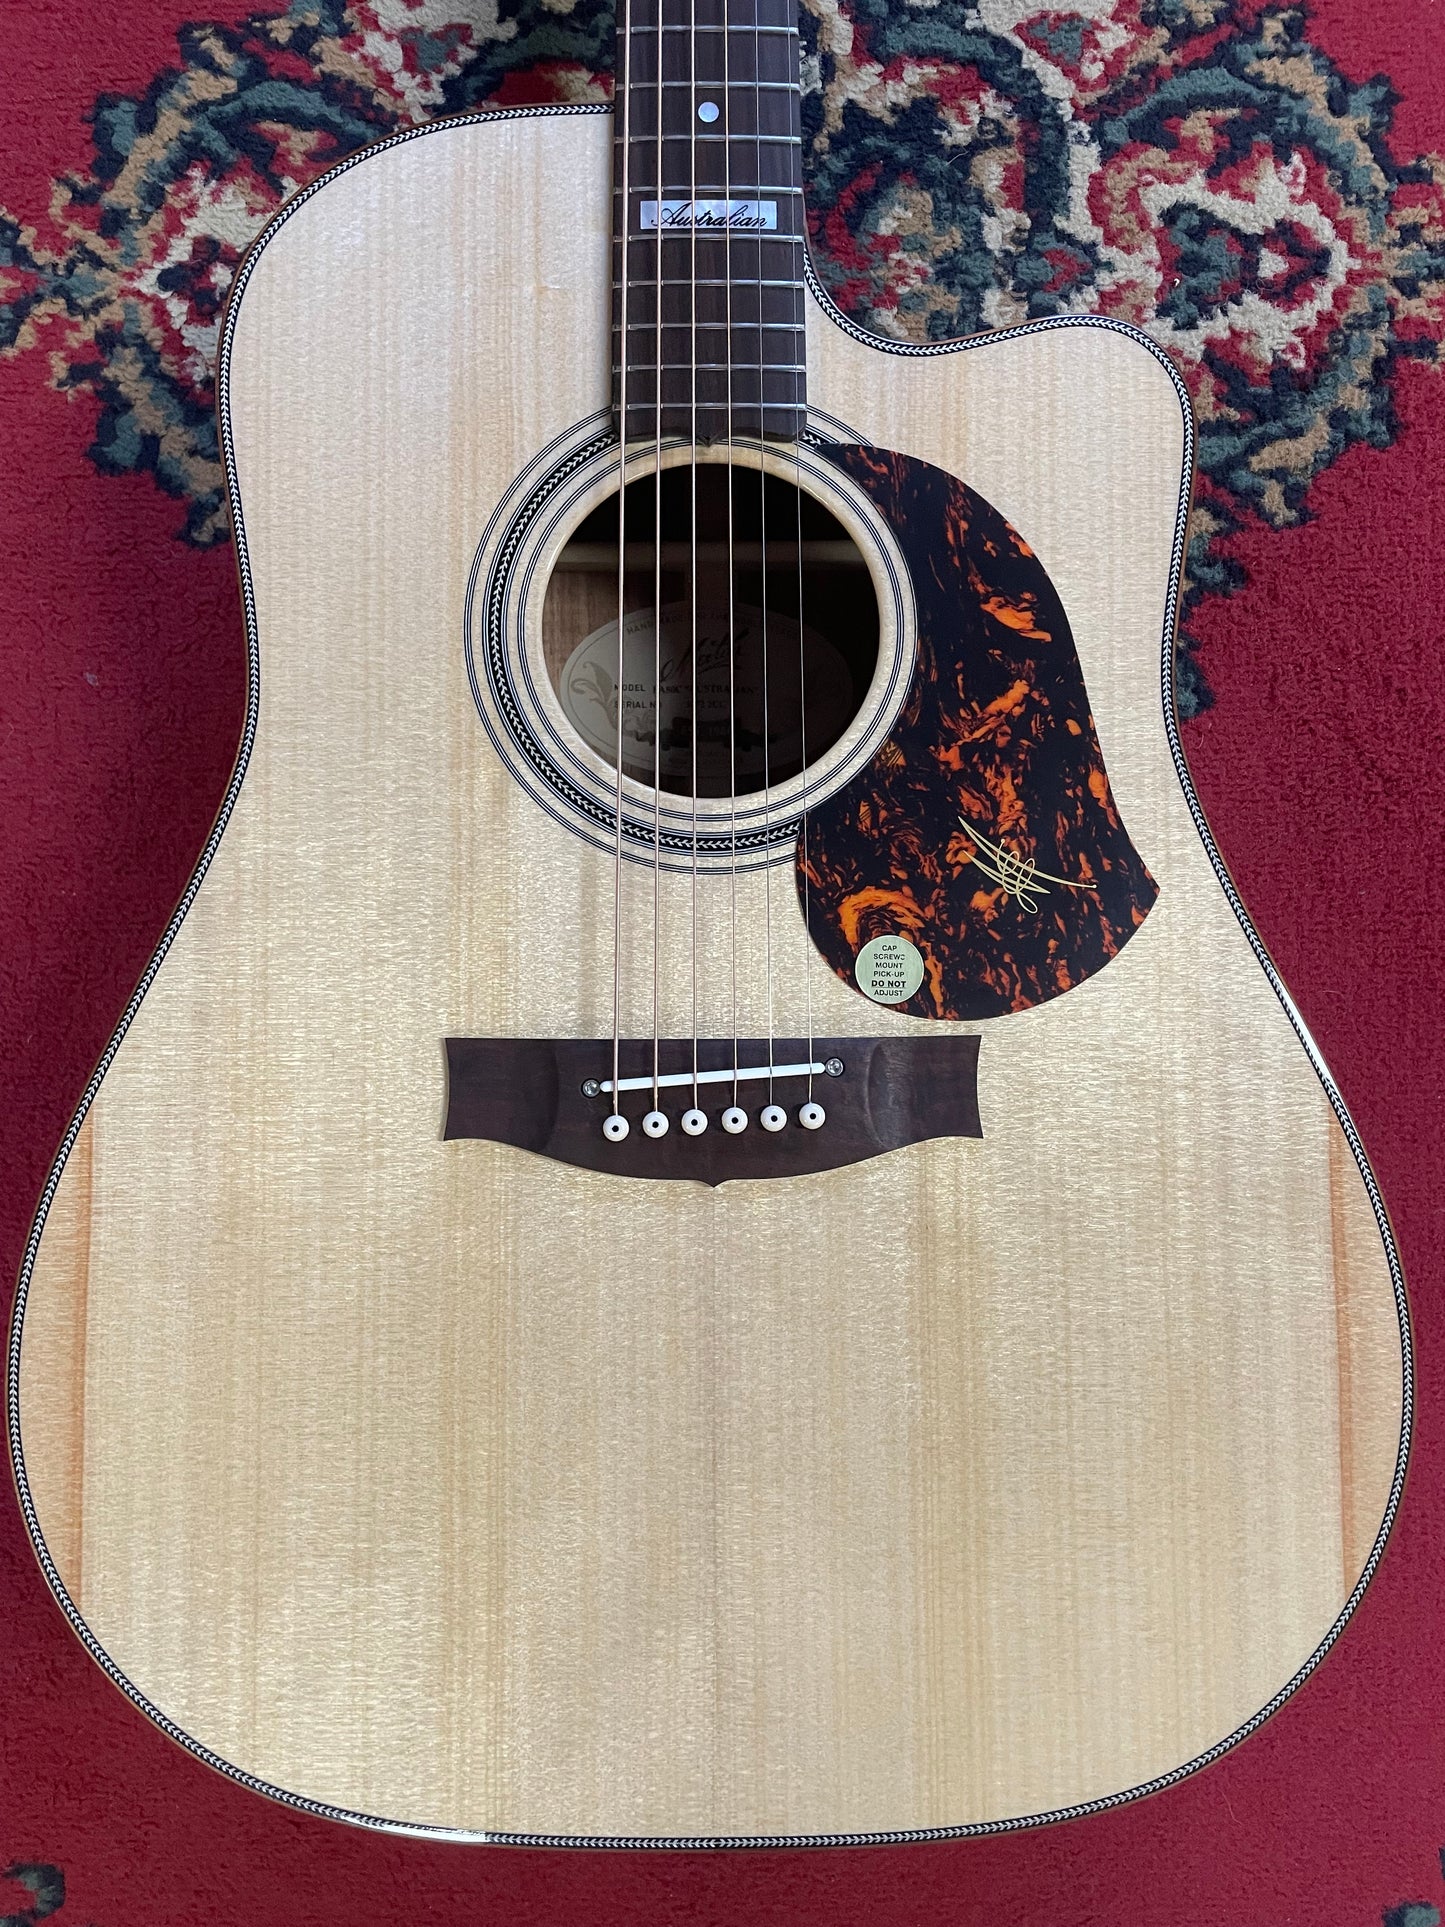 Maton EA80C The Australian Acoustic Electric Guitar with Cutaway